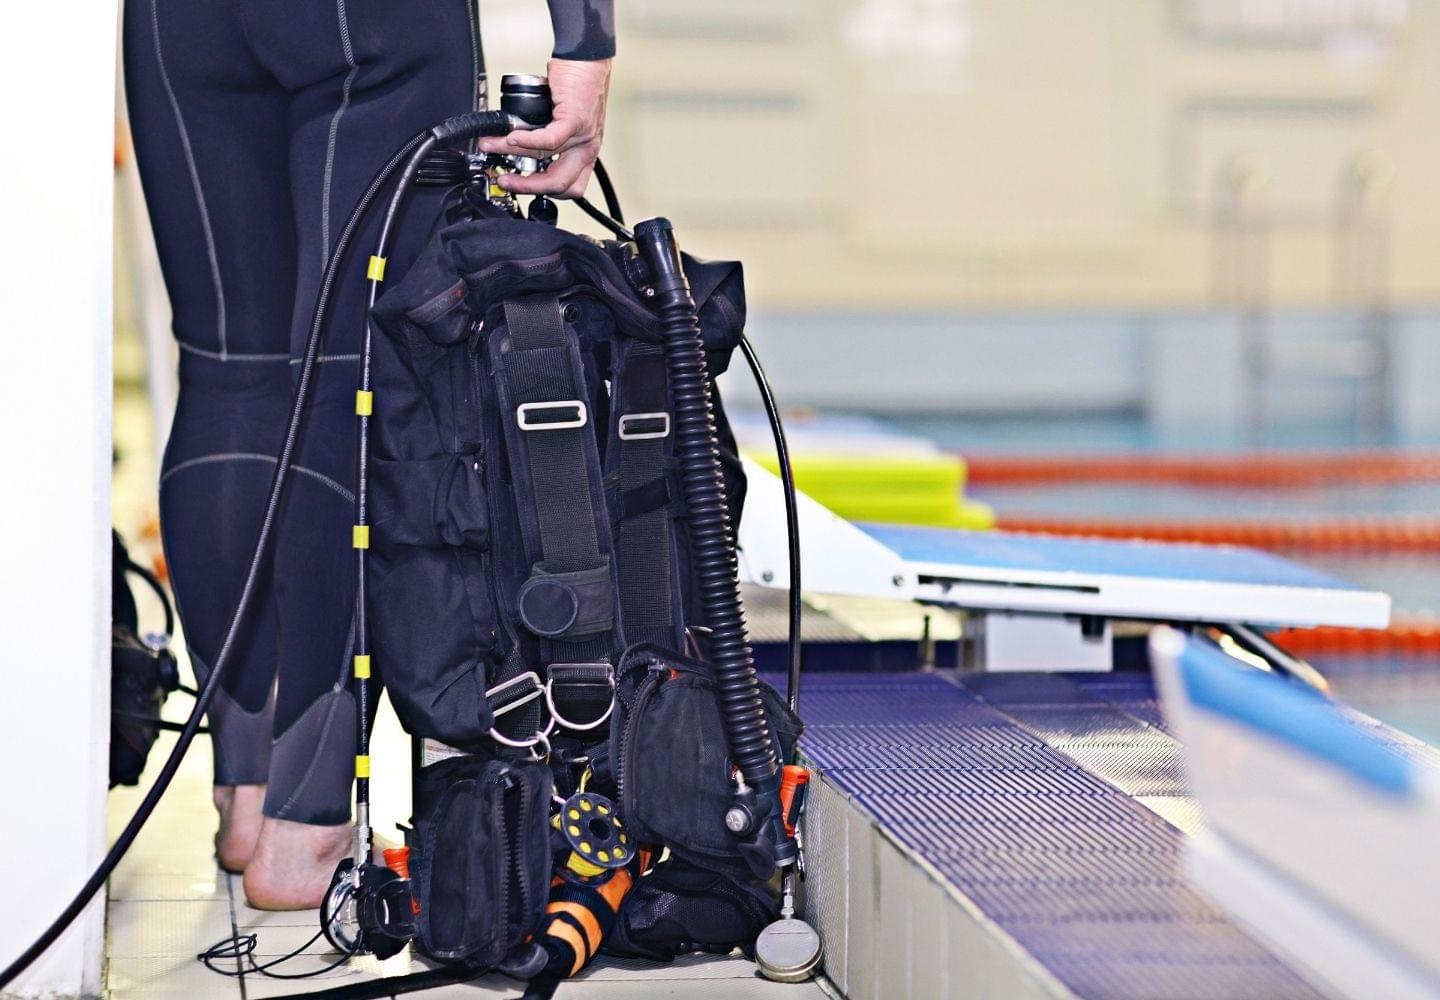 scuba dive gear near pool